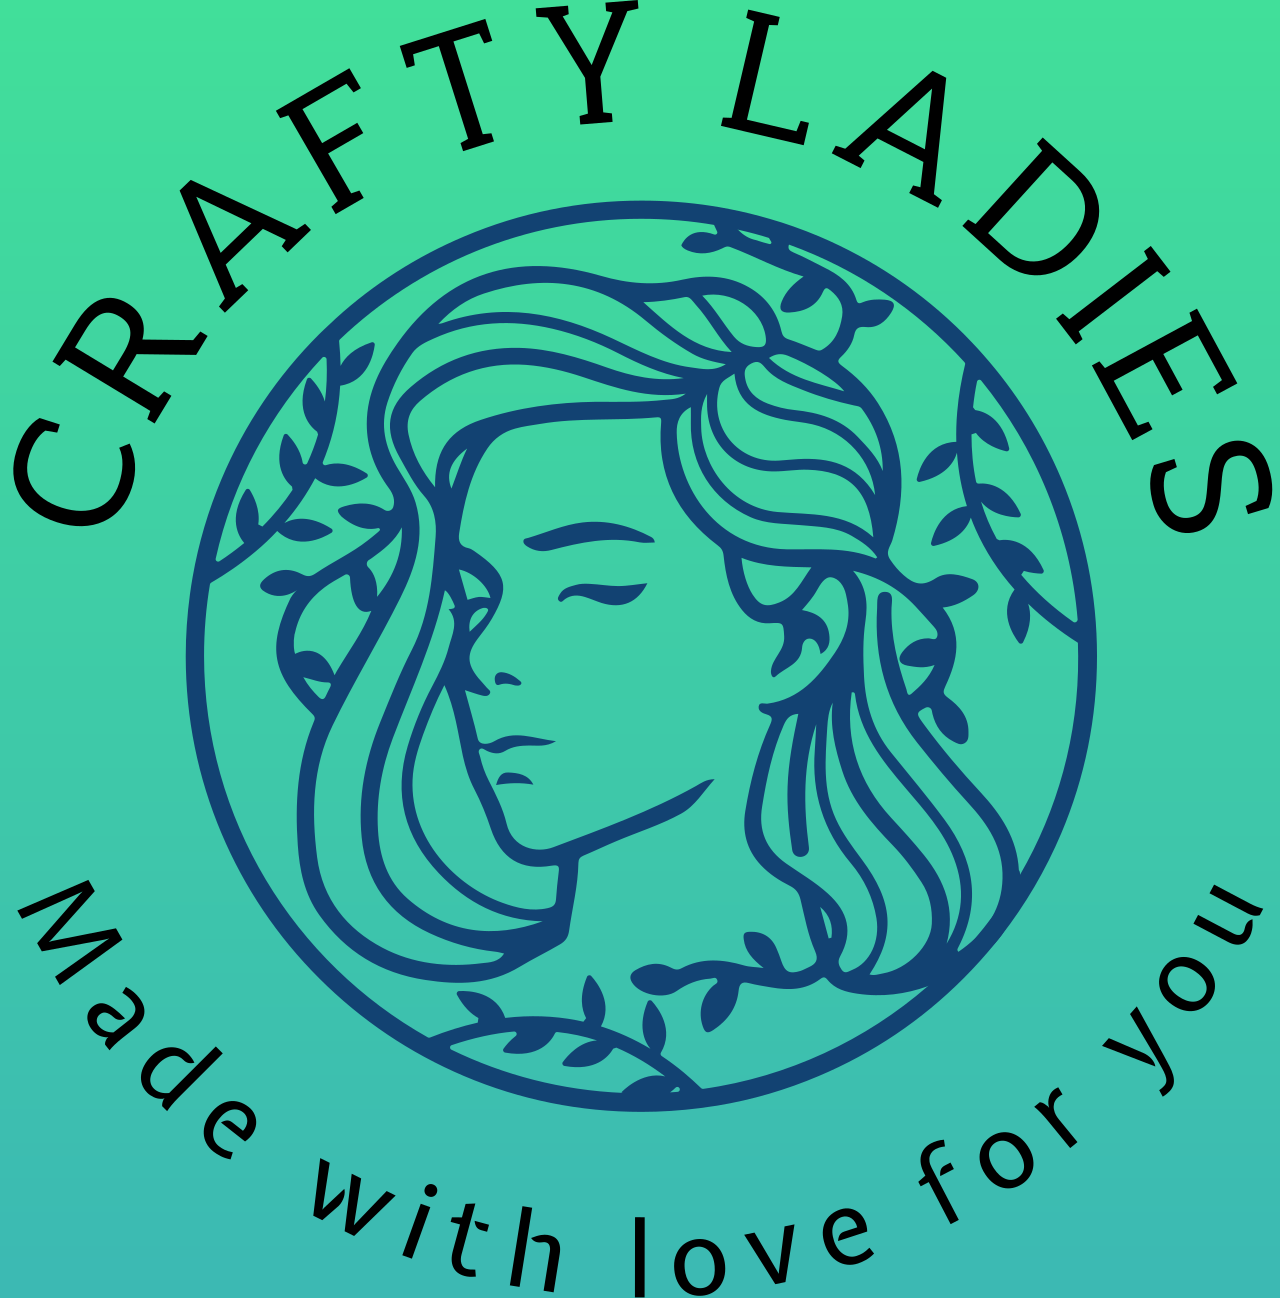 Crafty Ladies's logo